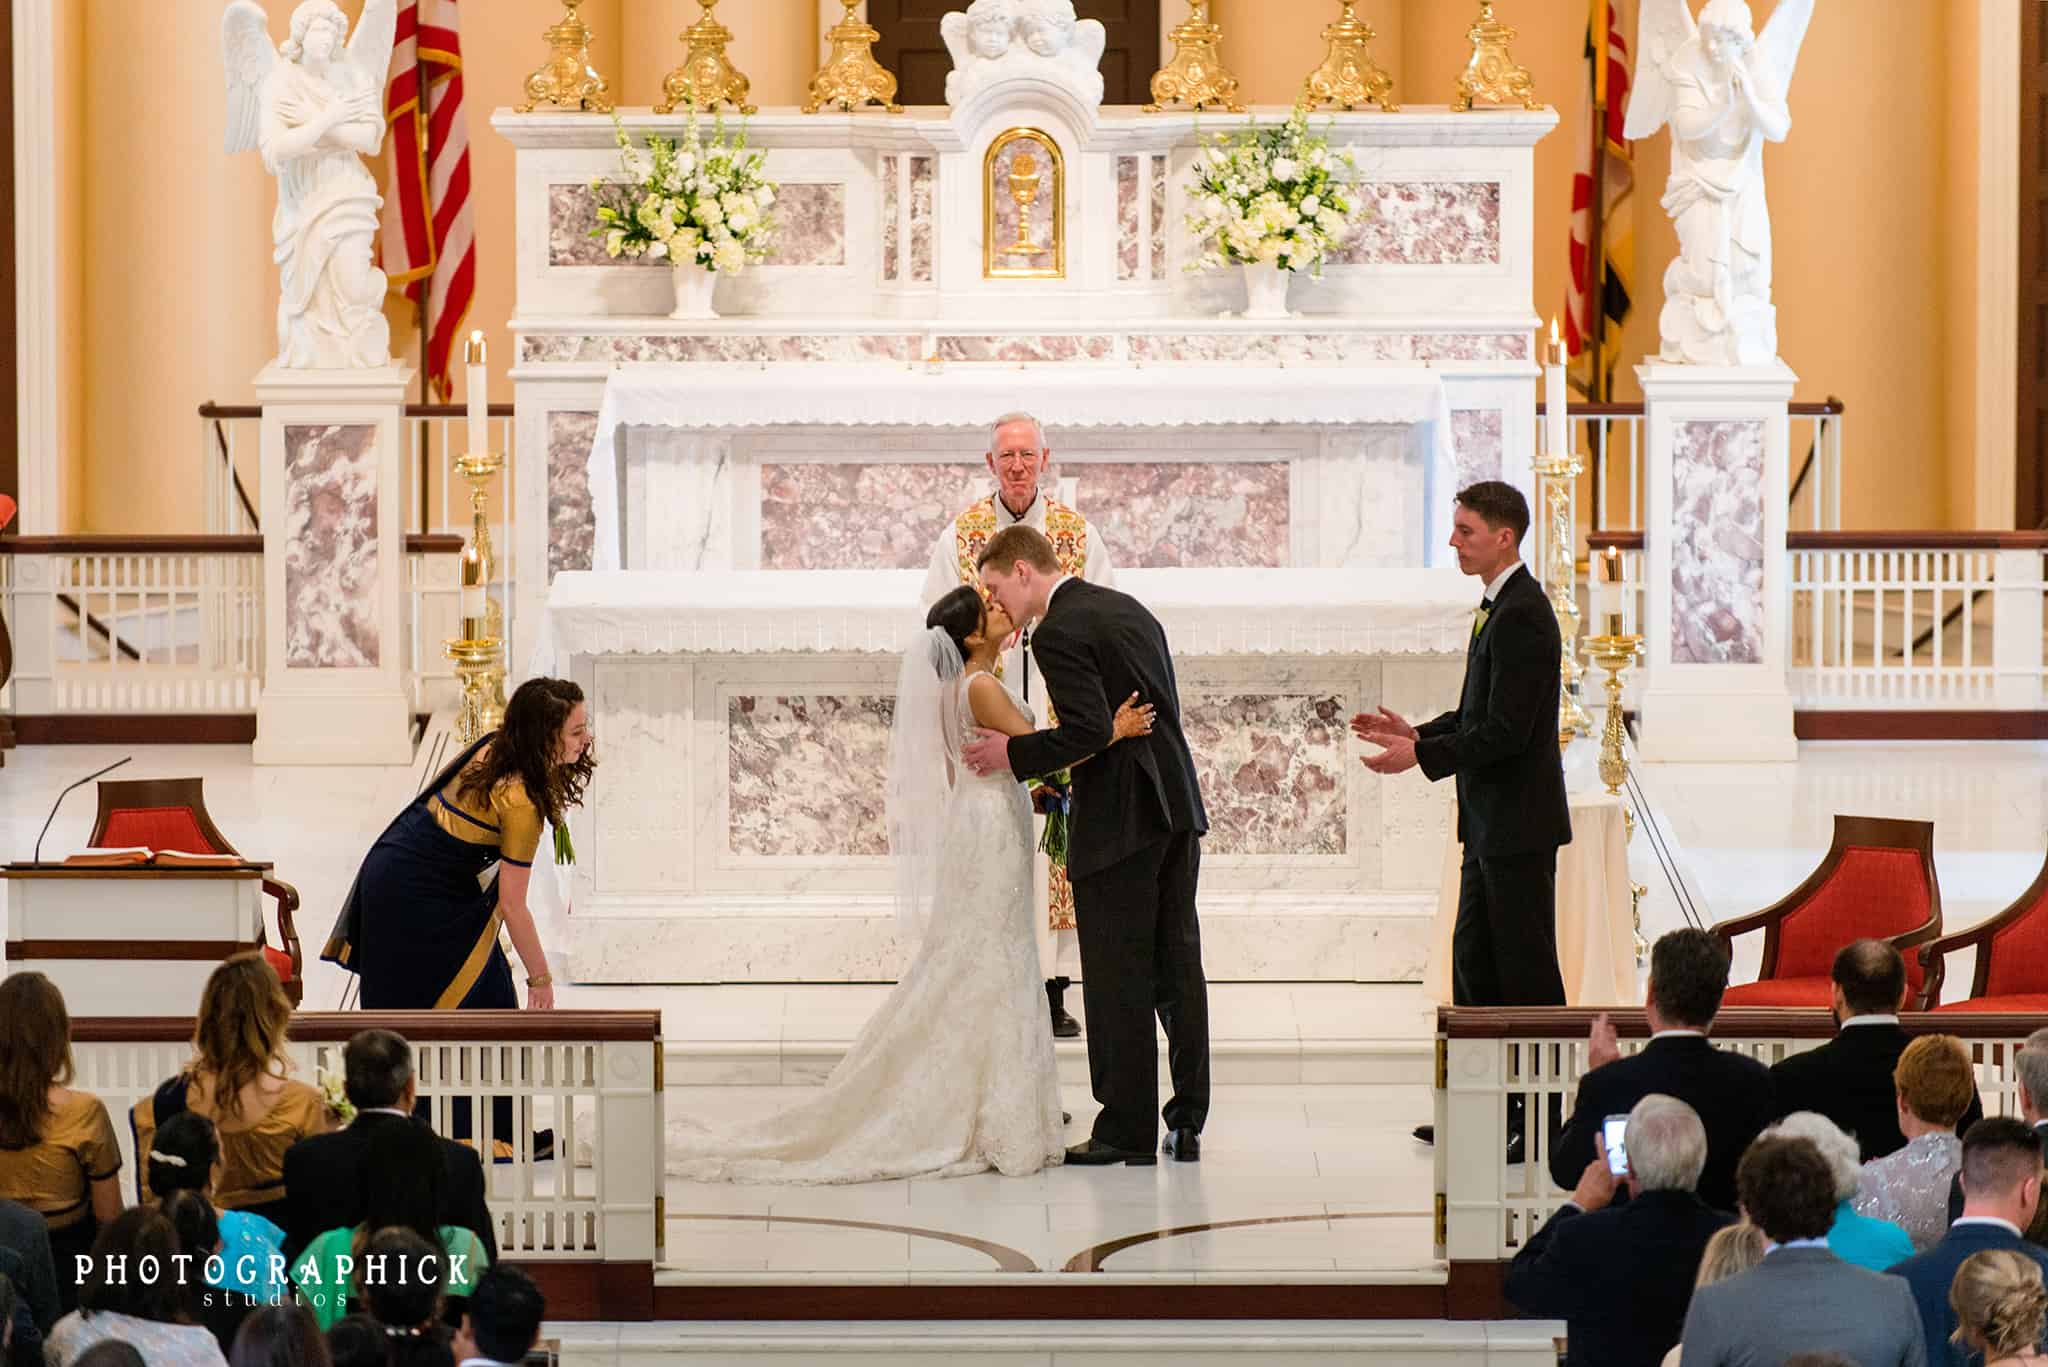 Baltimore Interfaith Wedding, Baltimore Interfaith Wedding of Mala and Sean